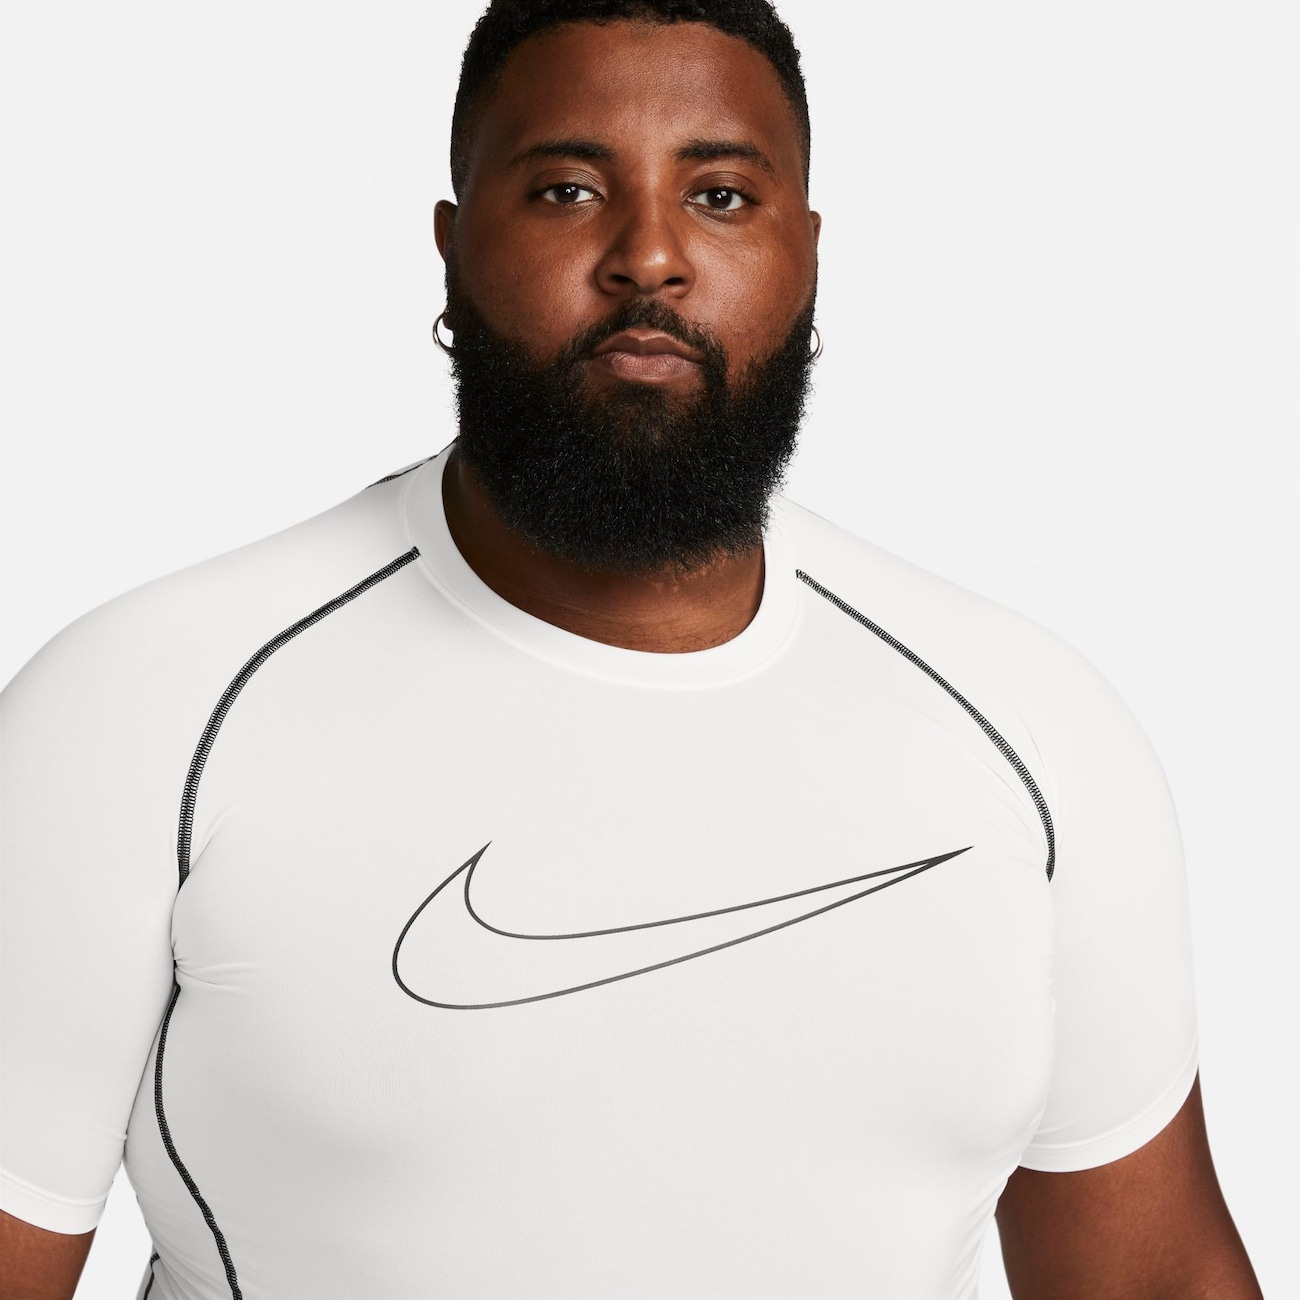 Camiseta Nike Pro Dri-FIT Masculina - Nike